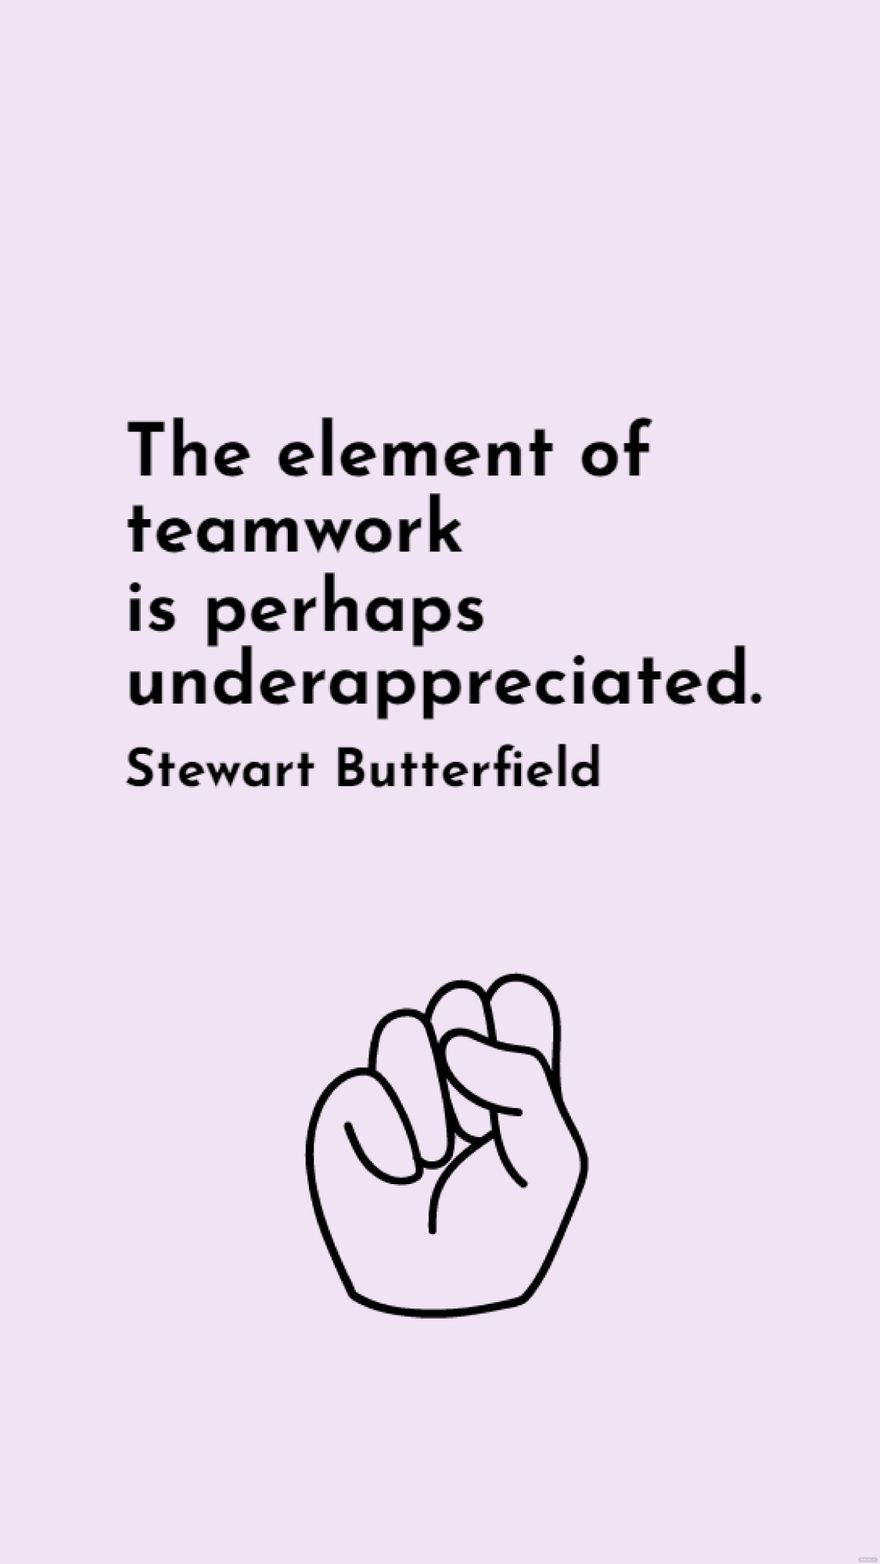 Stewart Butterfield - The element of teamwork is perhaps underappreciated.